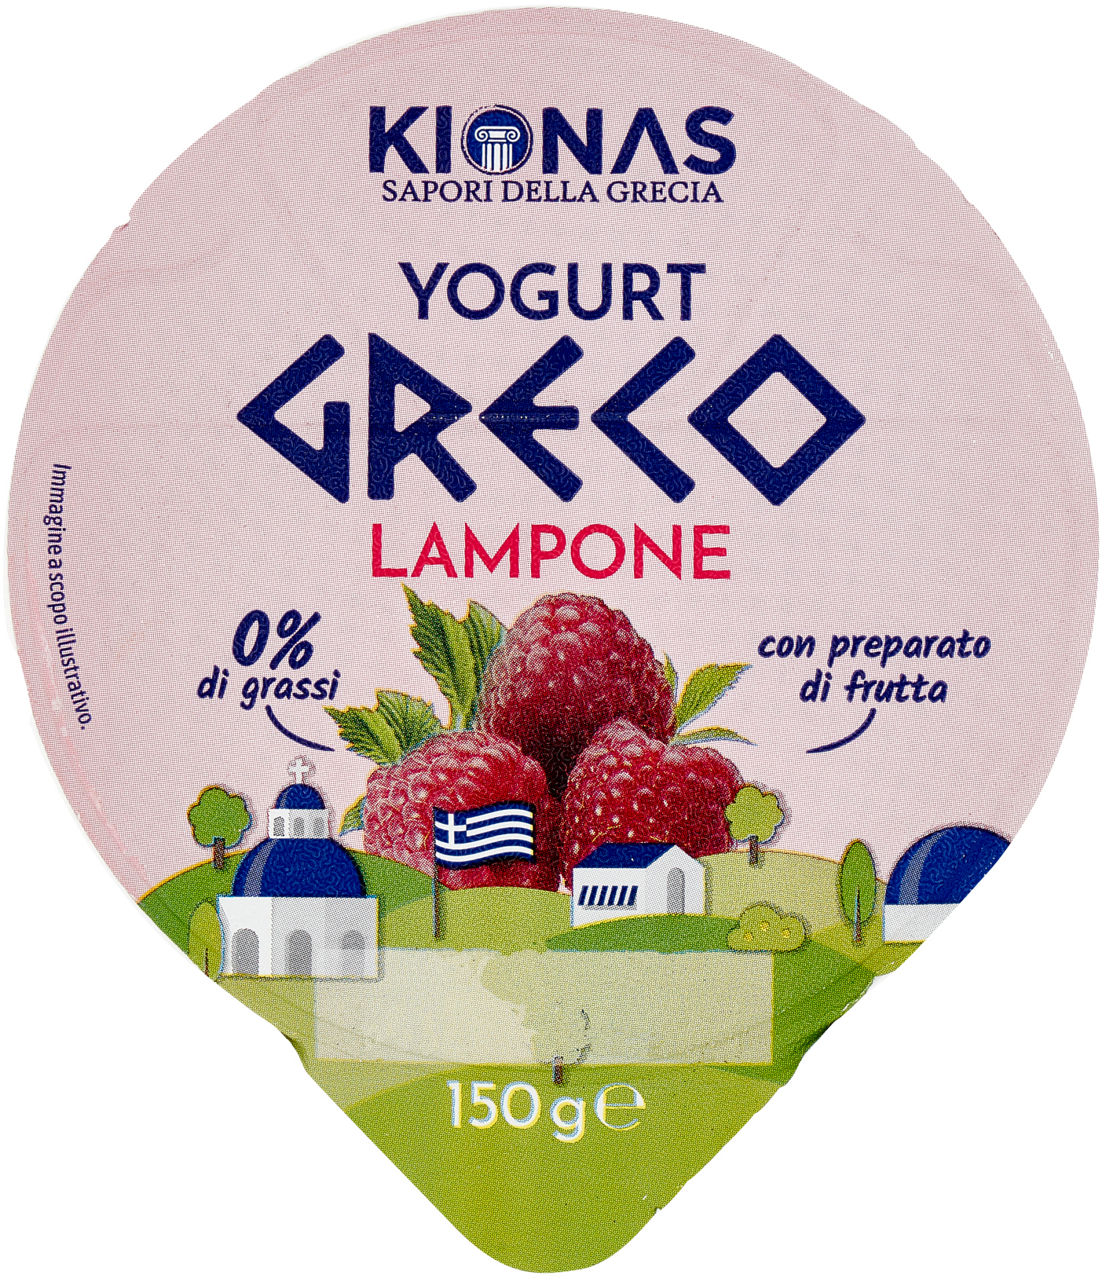 Yogurt greco 0% lampone split cup kionas g 150